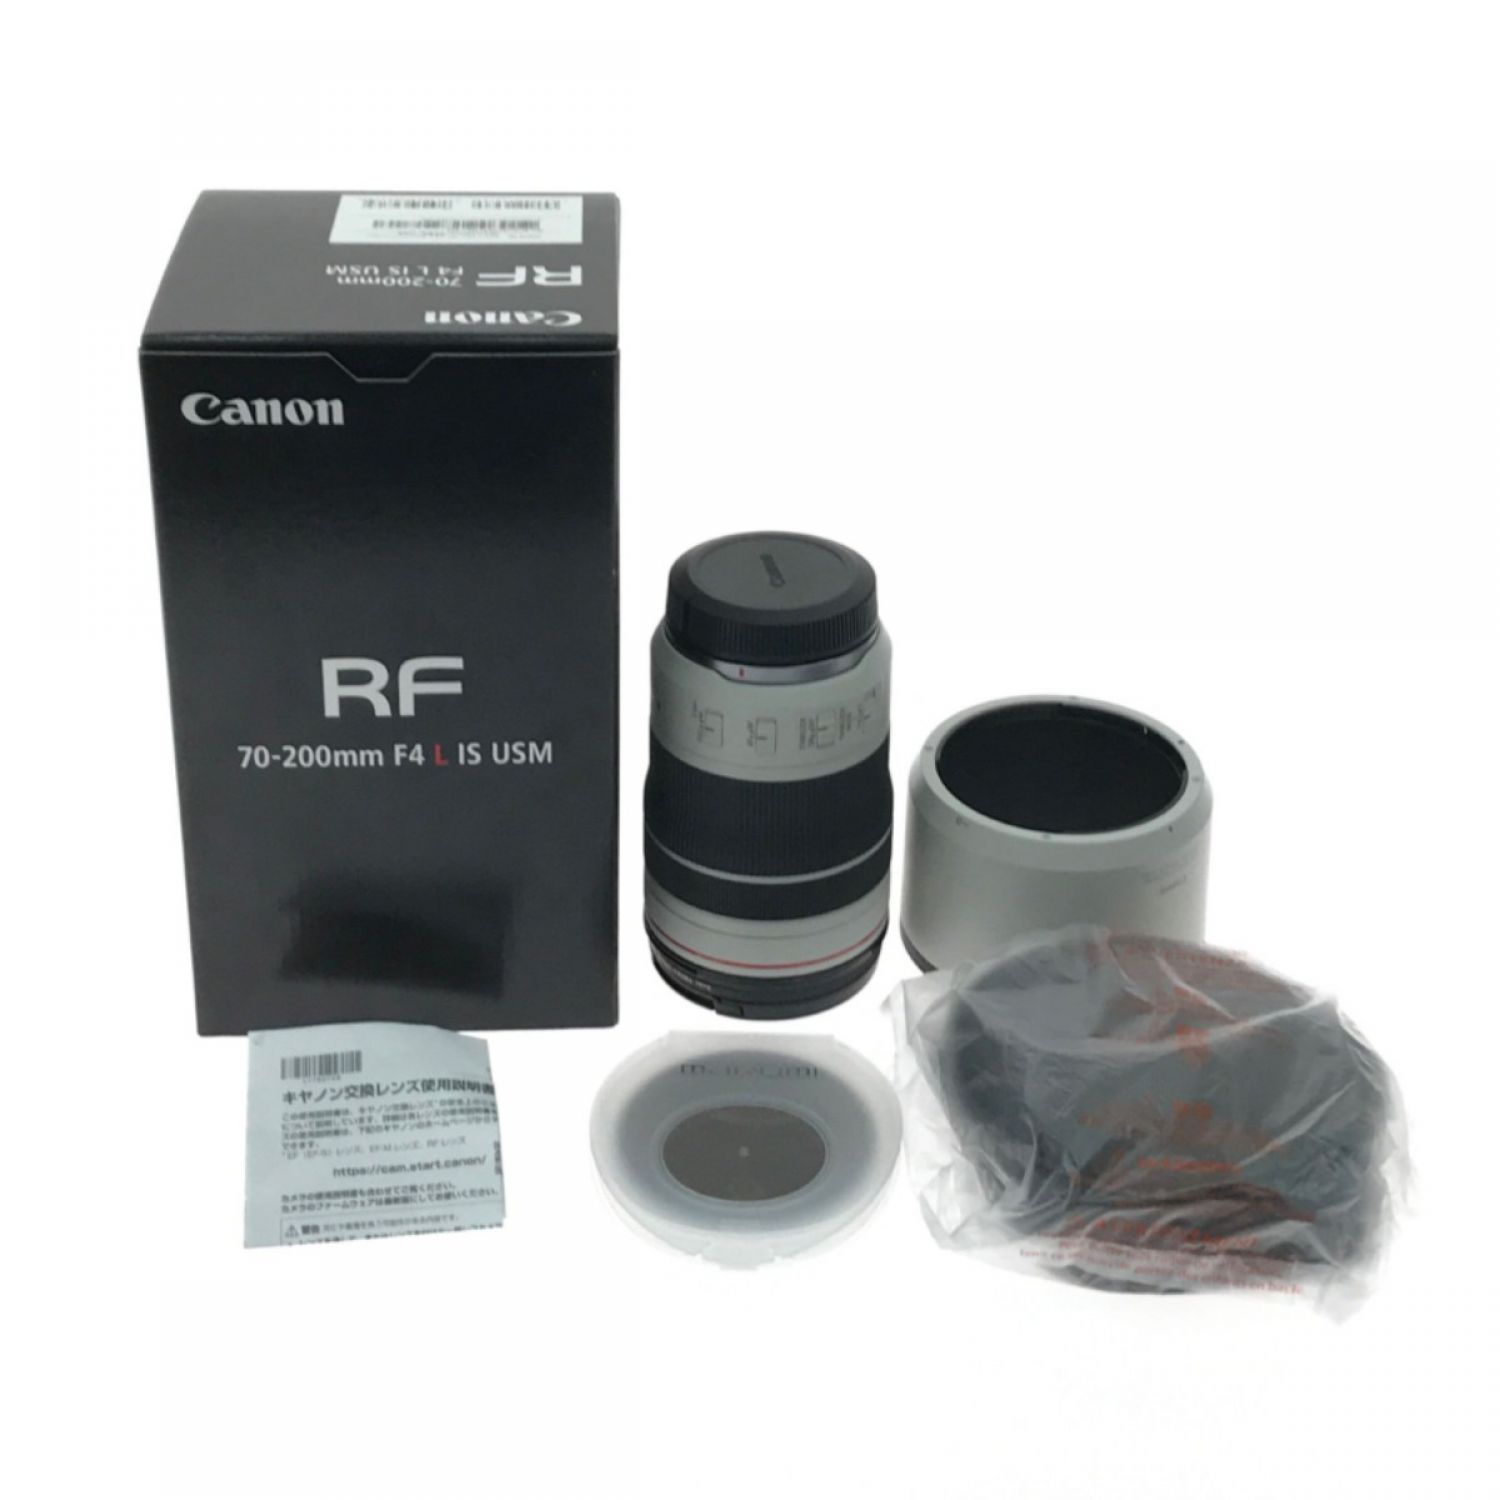 Canon RFレンズ RF70-200mm F4 L IS USM 新品未使用カメラ